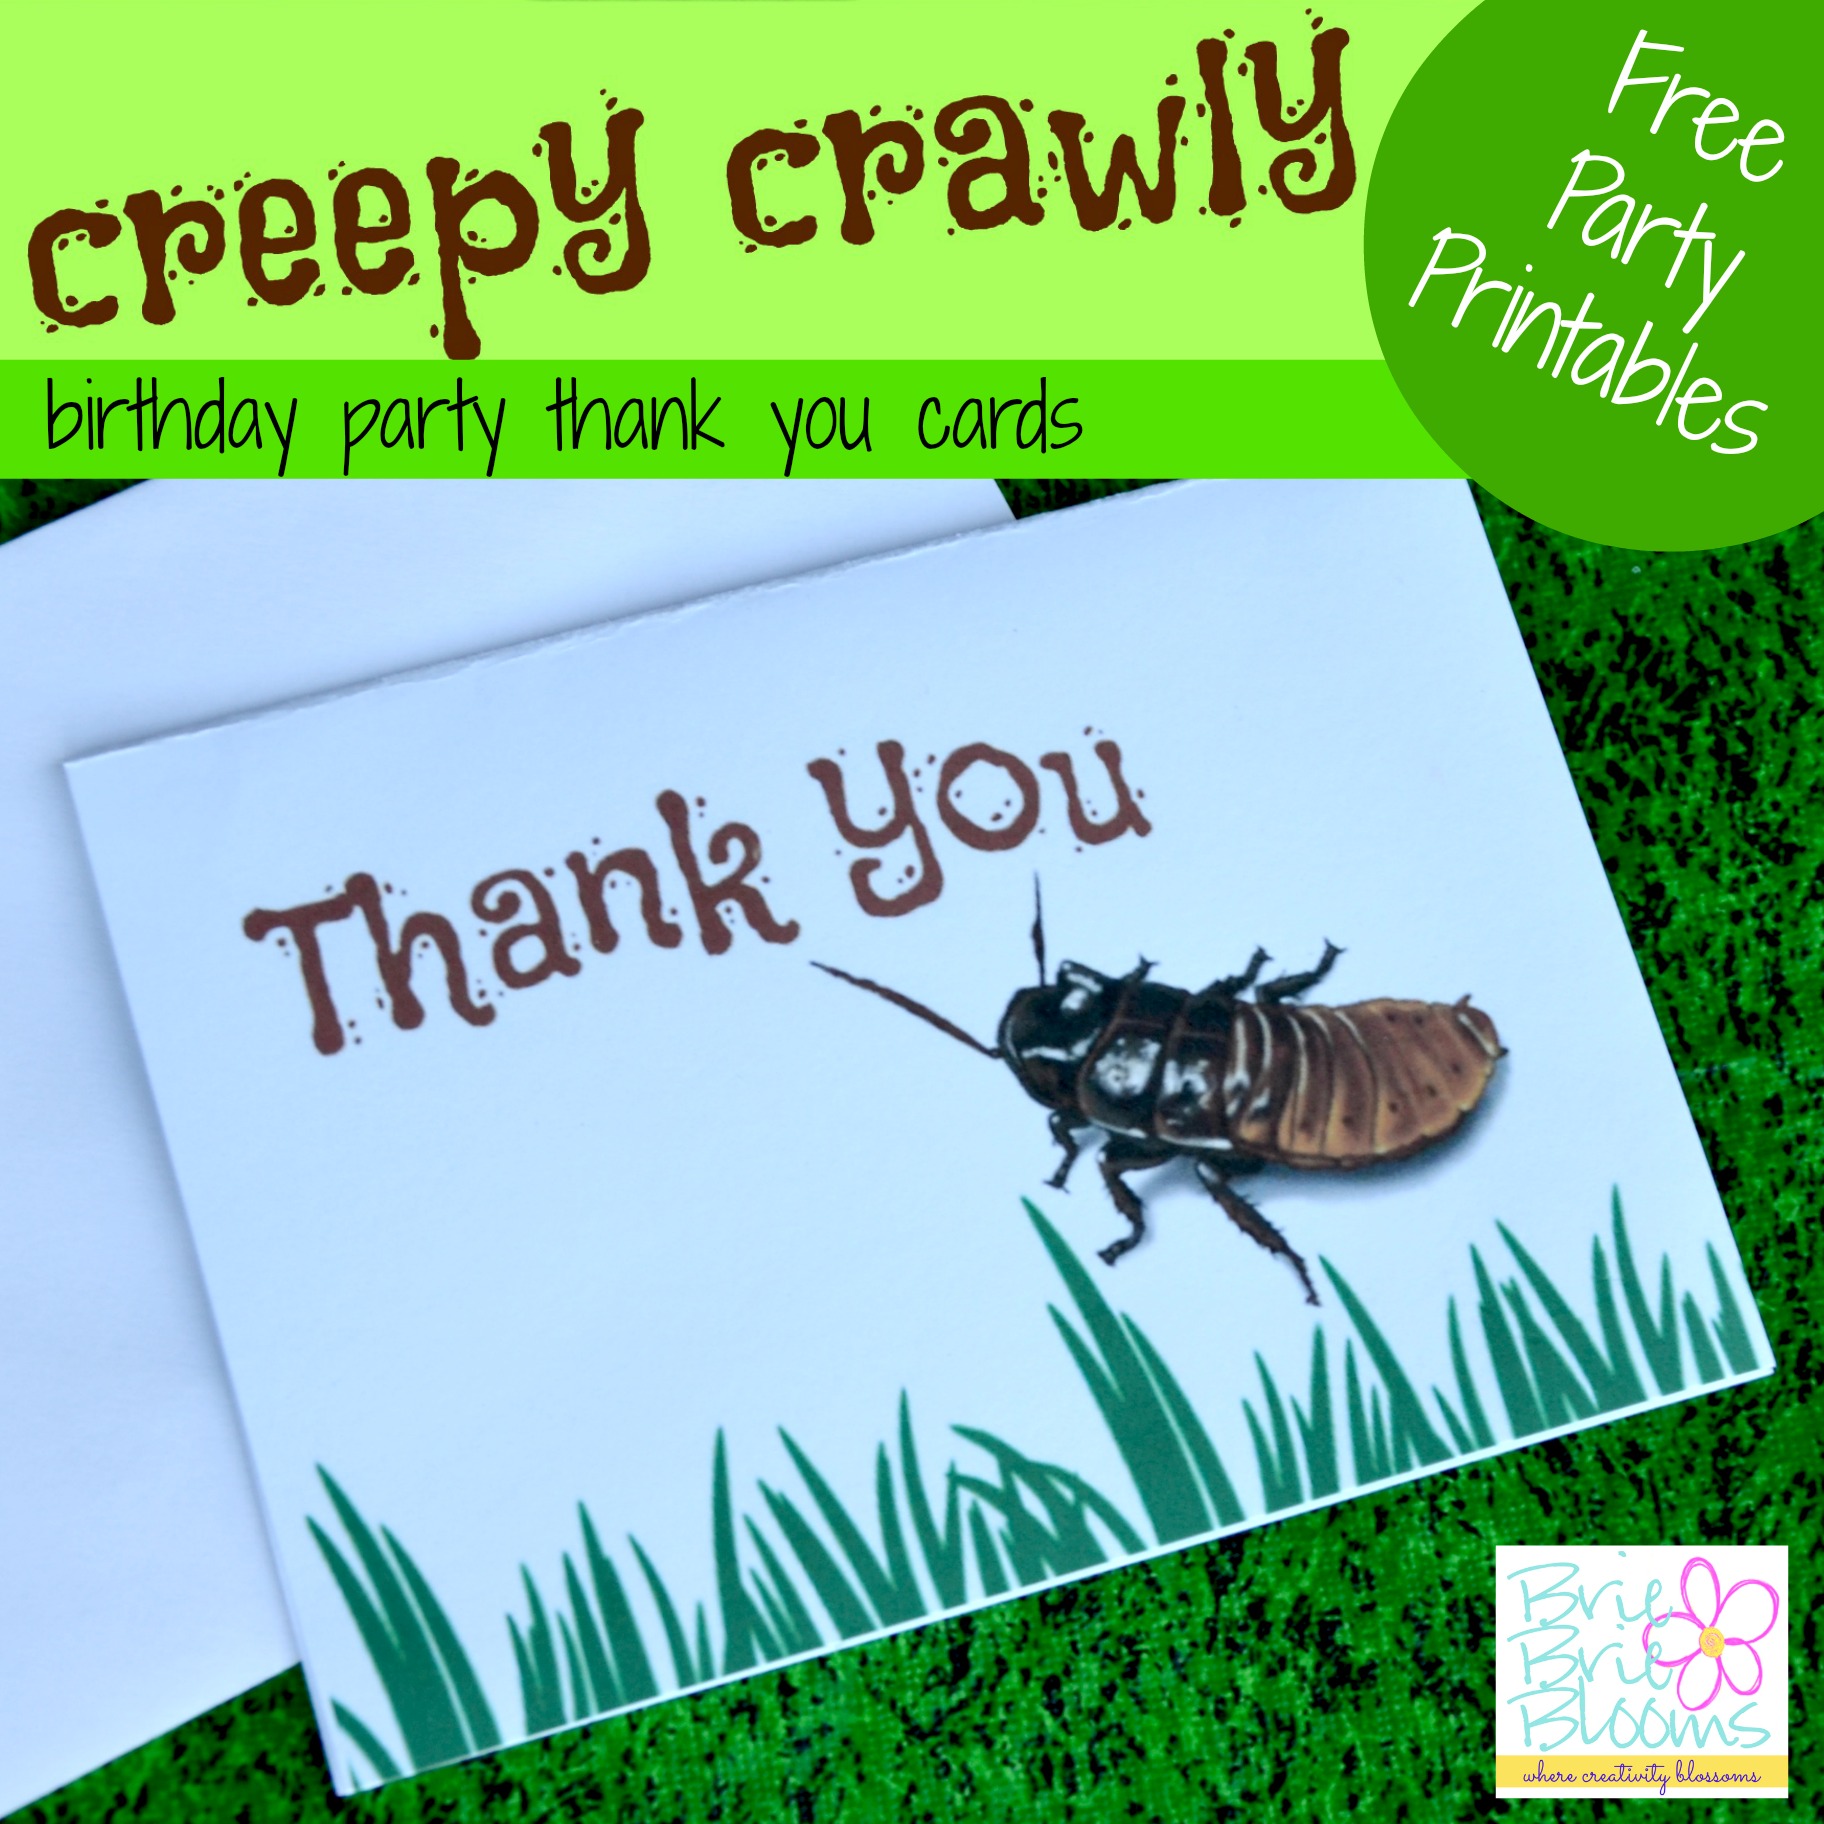 Creepy Crawly birthday party thank you cards, free printable